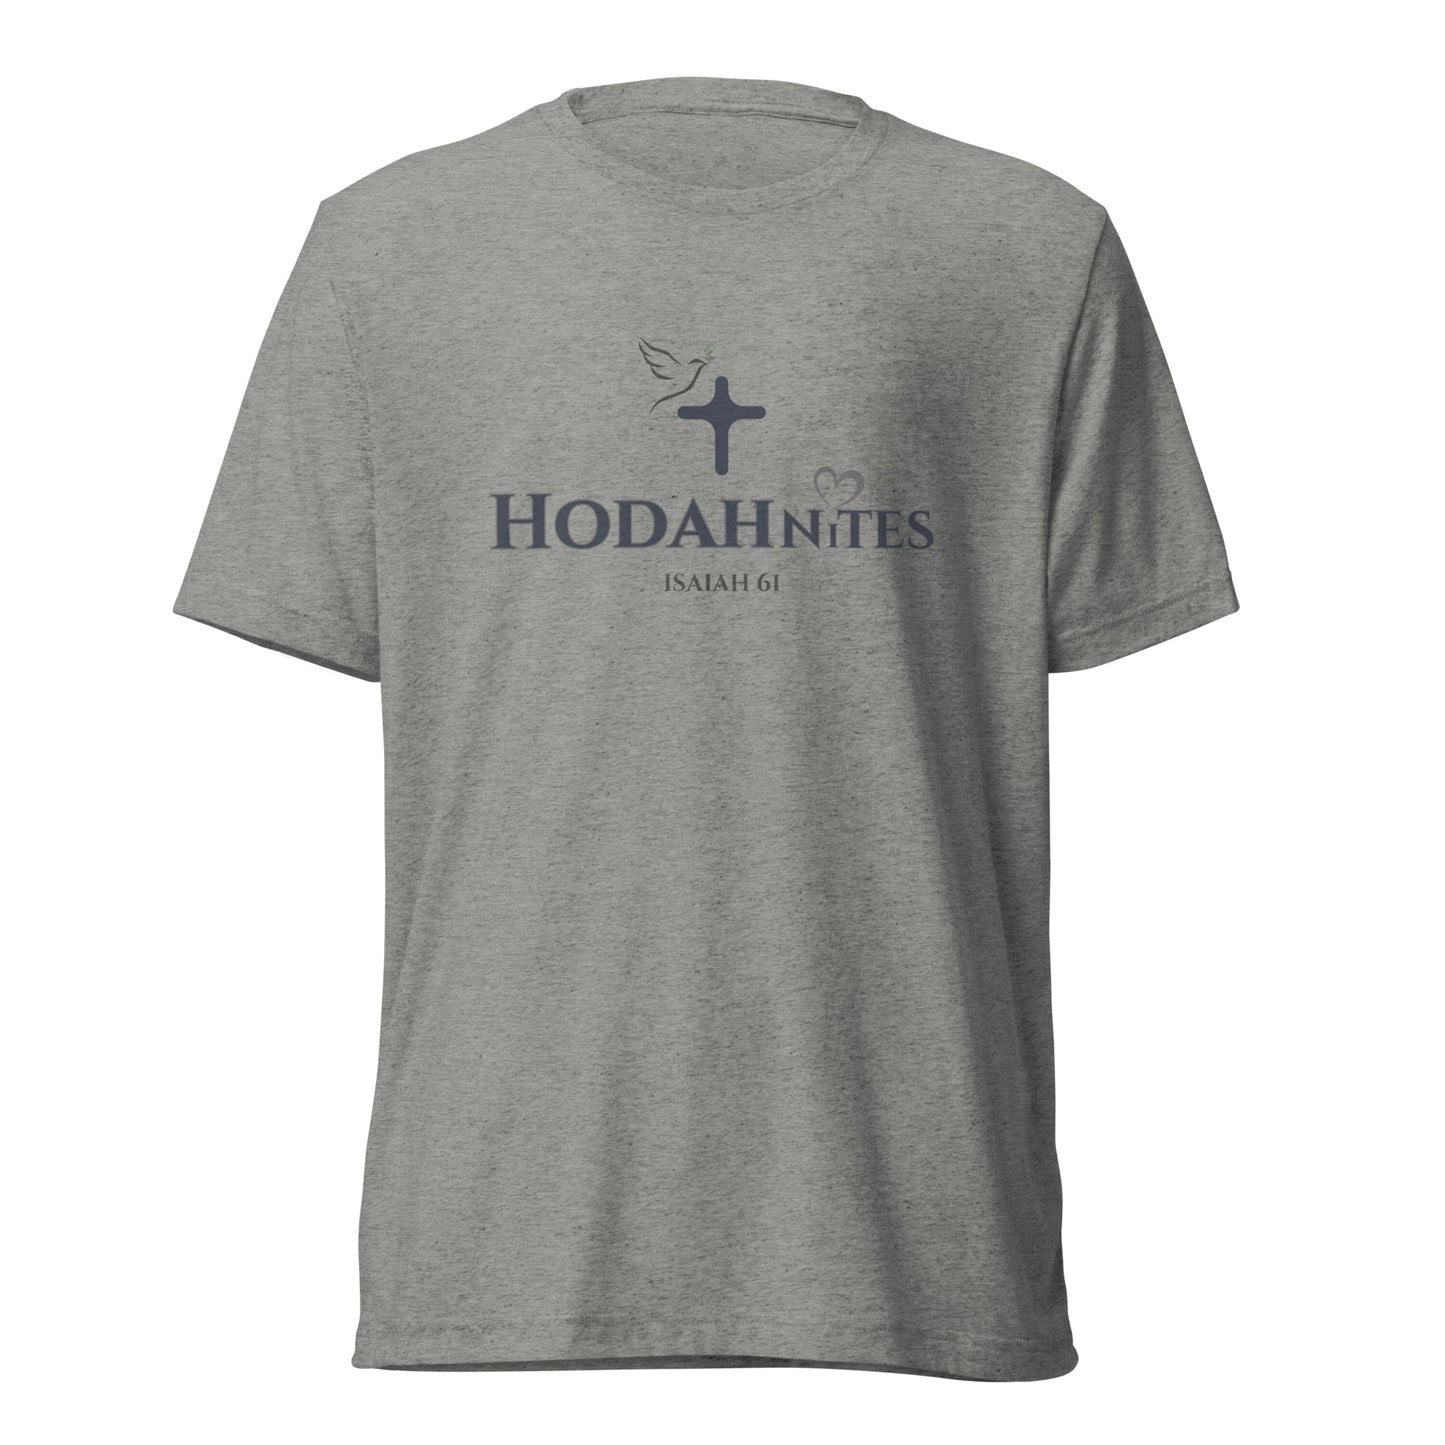 HODAHnites Short Sleeve T-shirt